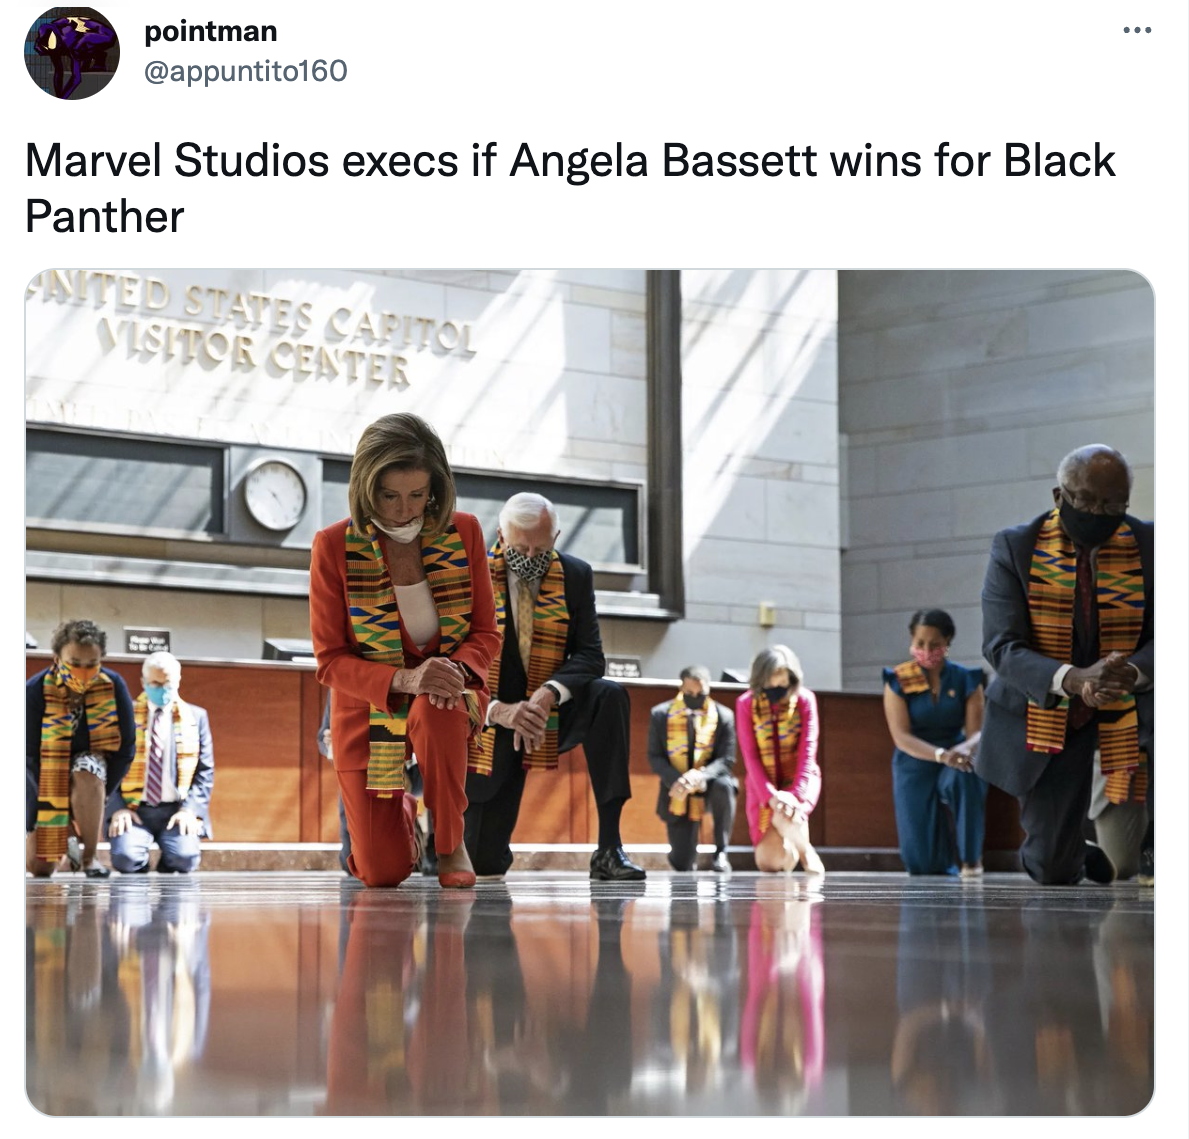 2023 Oscar Nominated Memes - pointman Marvel Studios execs if Angela Bassett wins for Black Panther Nited States Capitol Visitor Center 7W I Wim